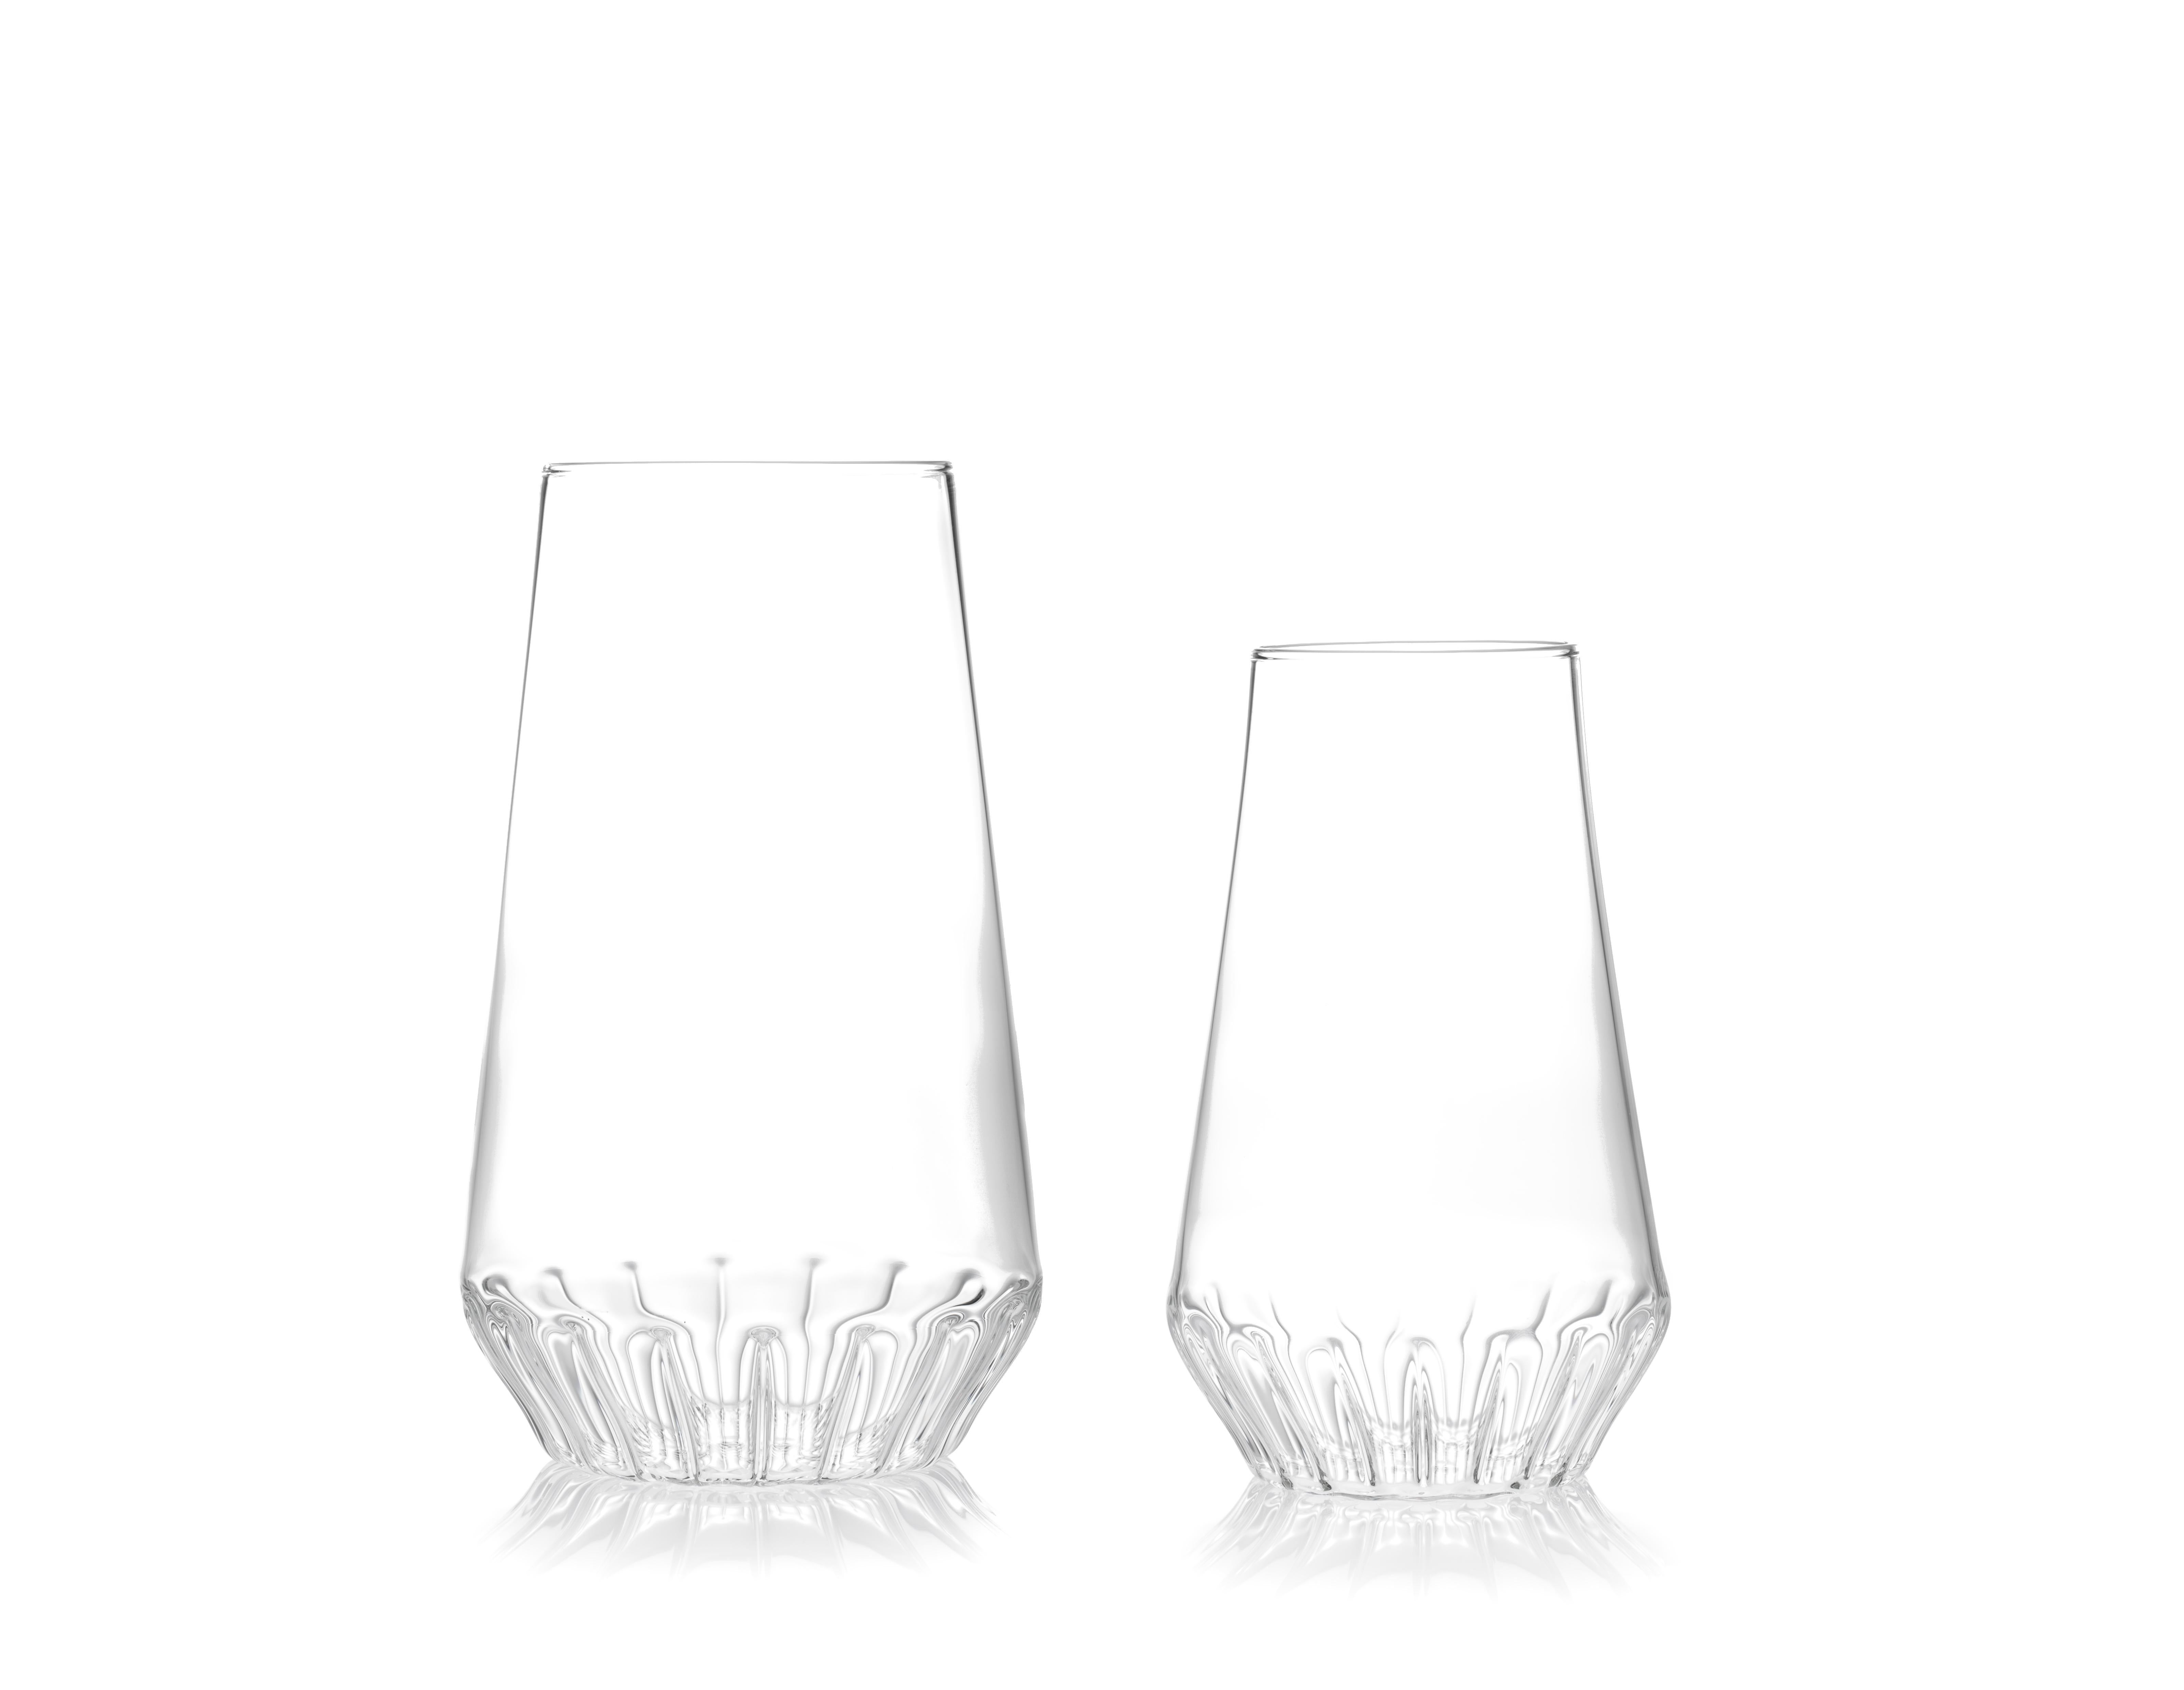 Forged fferrone Contemporary Czech Glass Clear Modern Medium Vase Handcrafted